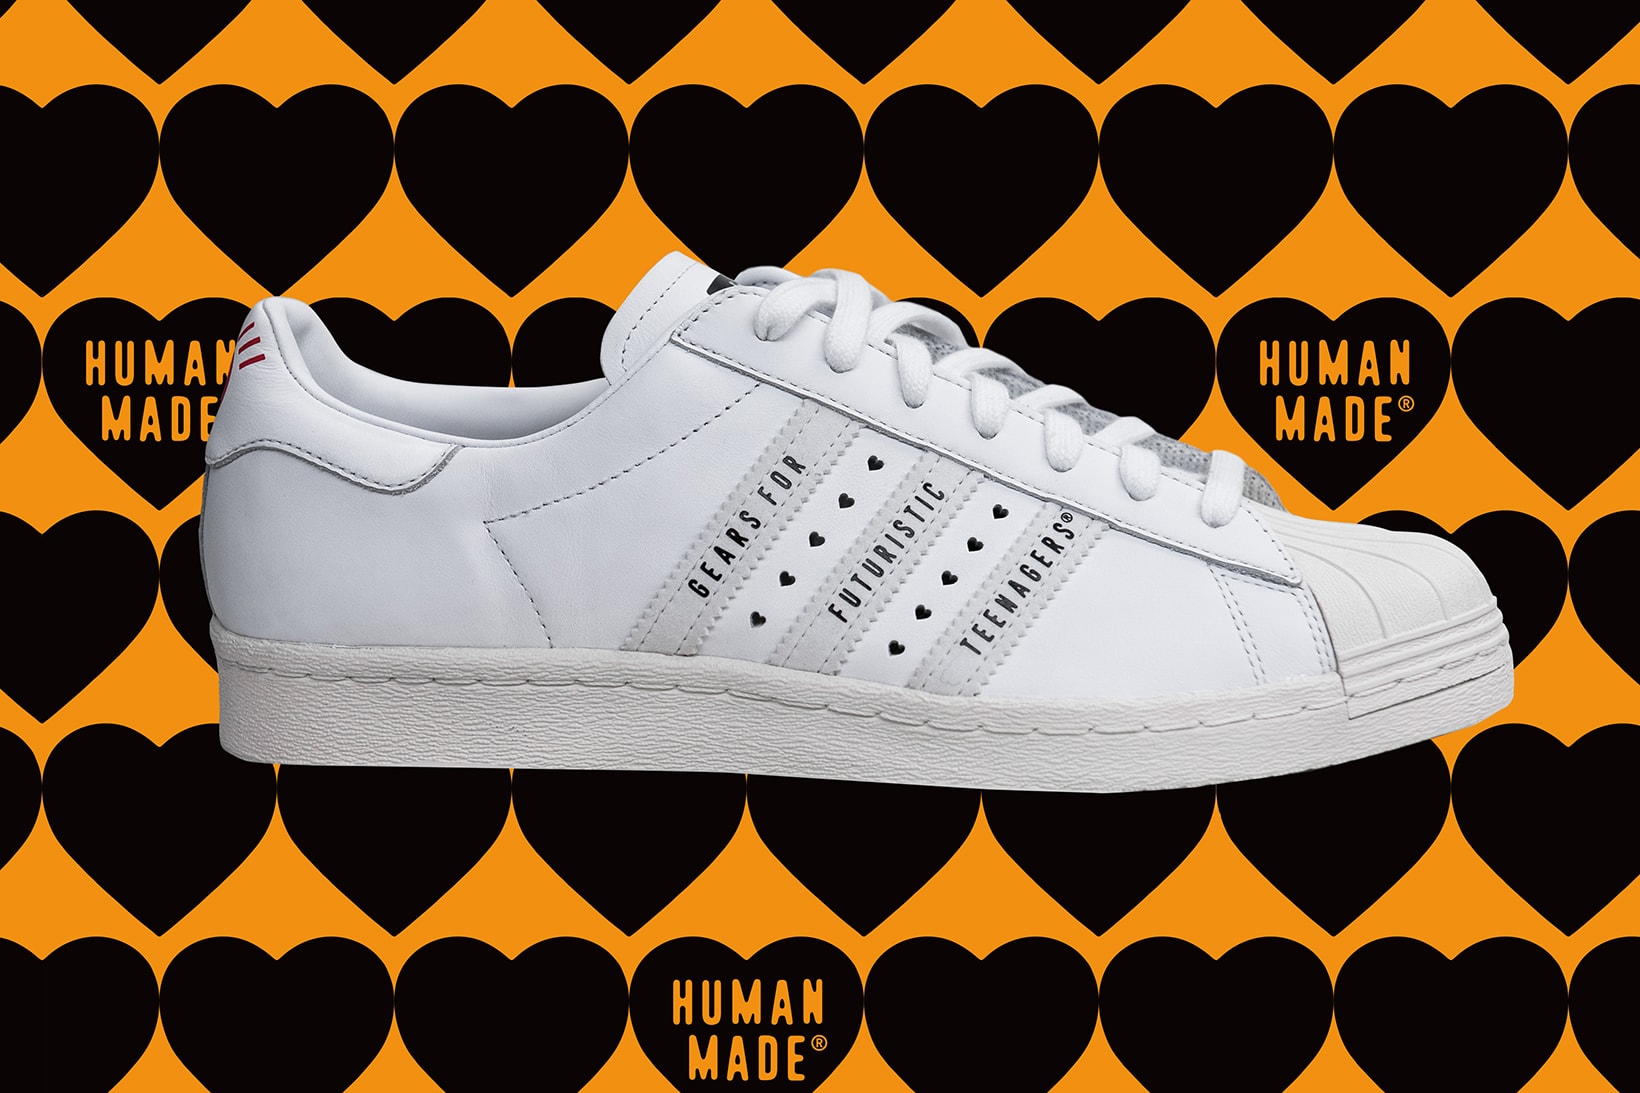 HUMAN MADE x adidas Originals Release Date Superstar 80s Sneakers Collaboration NIGO